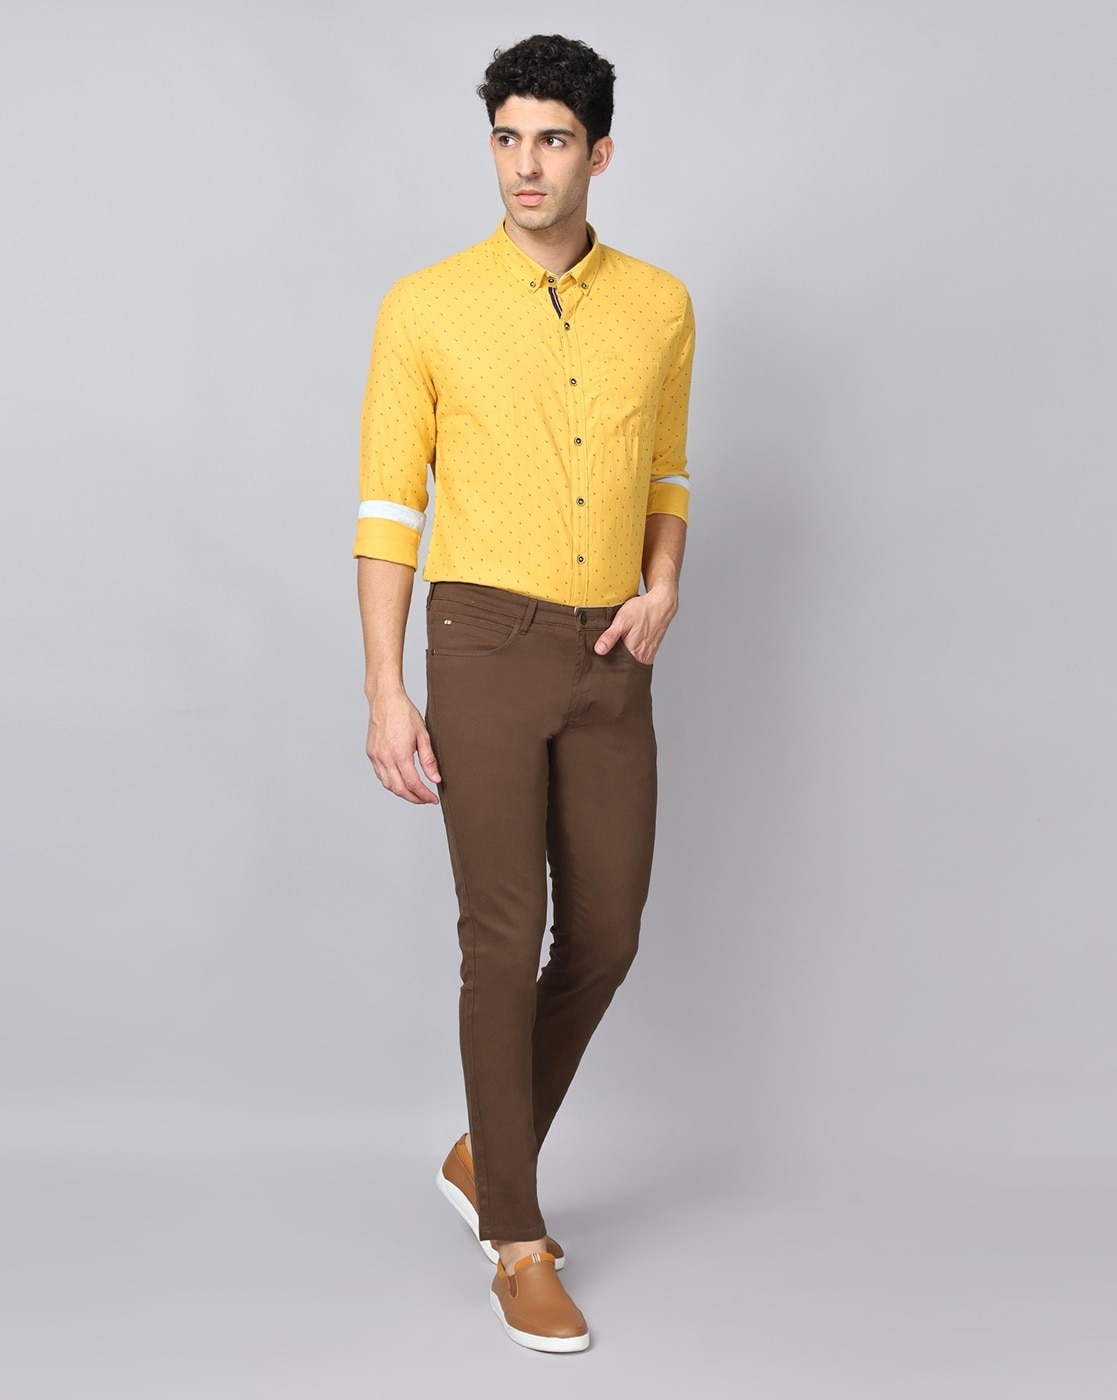 Men's Light Blue Dress Shirt, Yellow Chinos, Dark Brown Leather Double  Monks, Tan Sunglasses | Mens yellow pants, Mens outfits, Yellow pants outfit